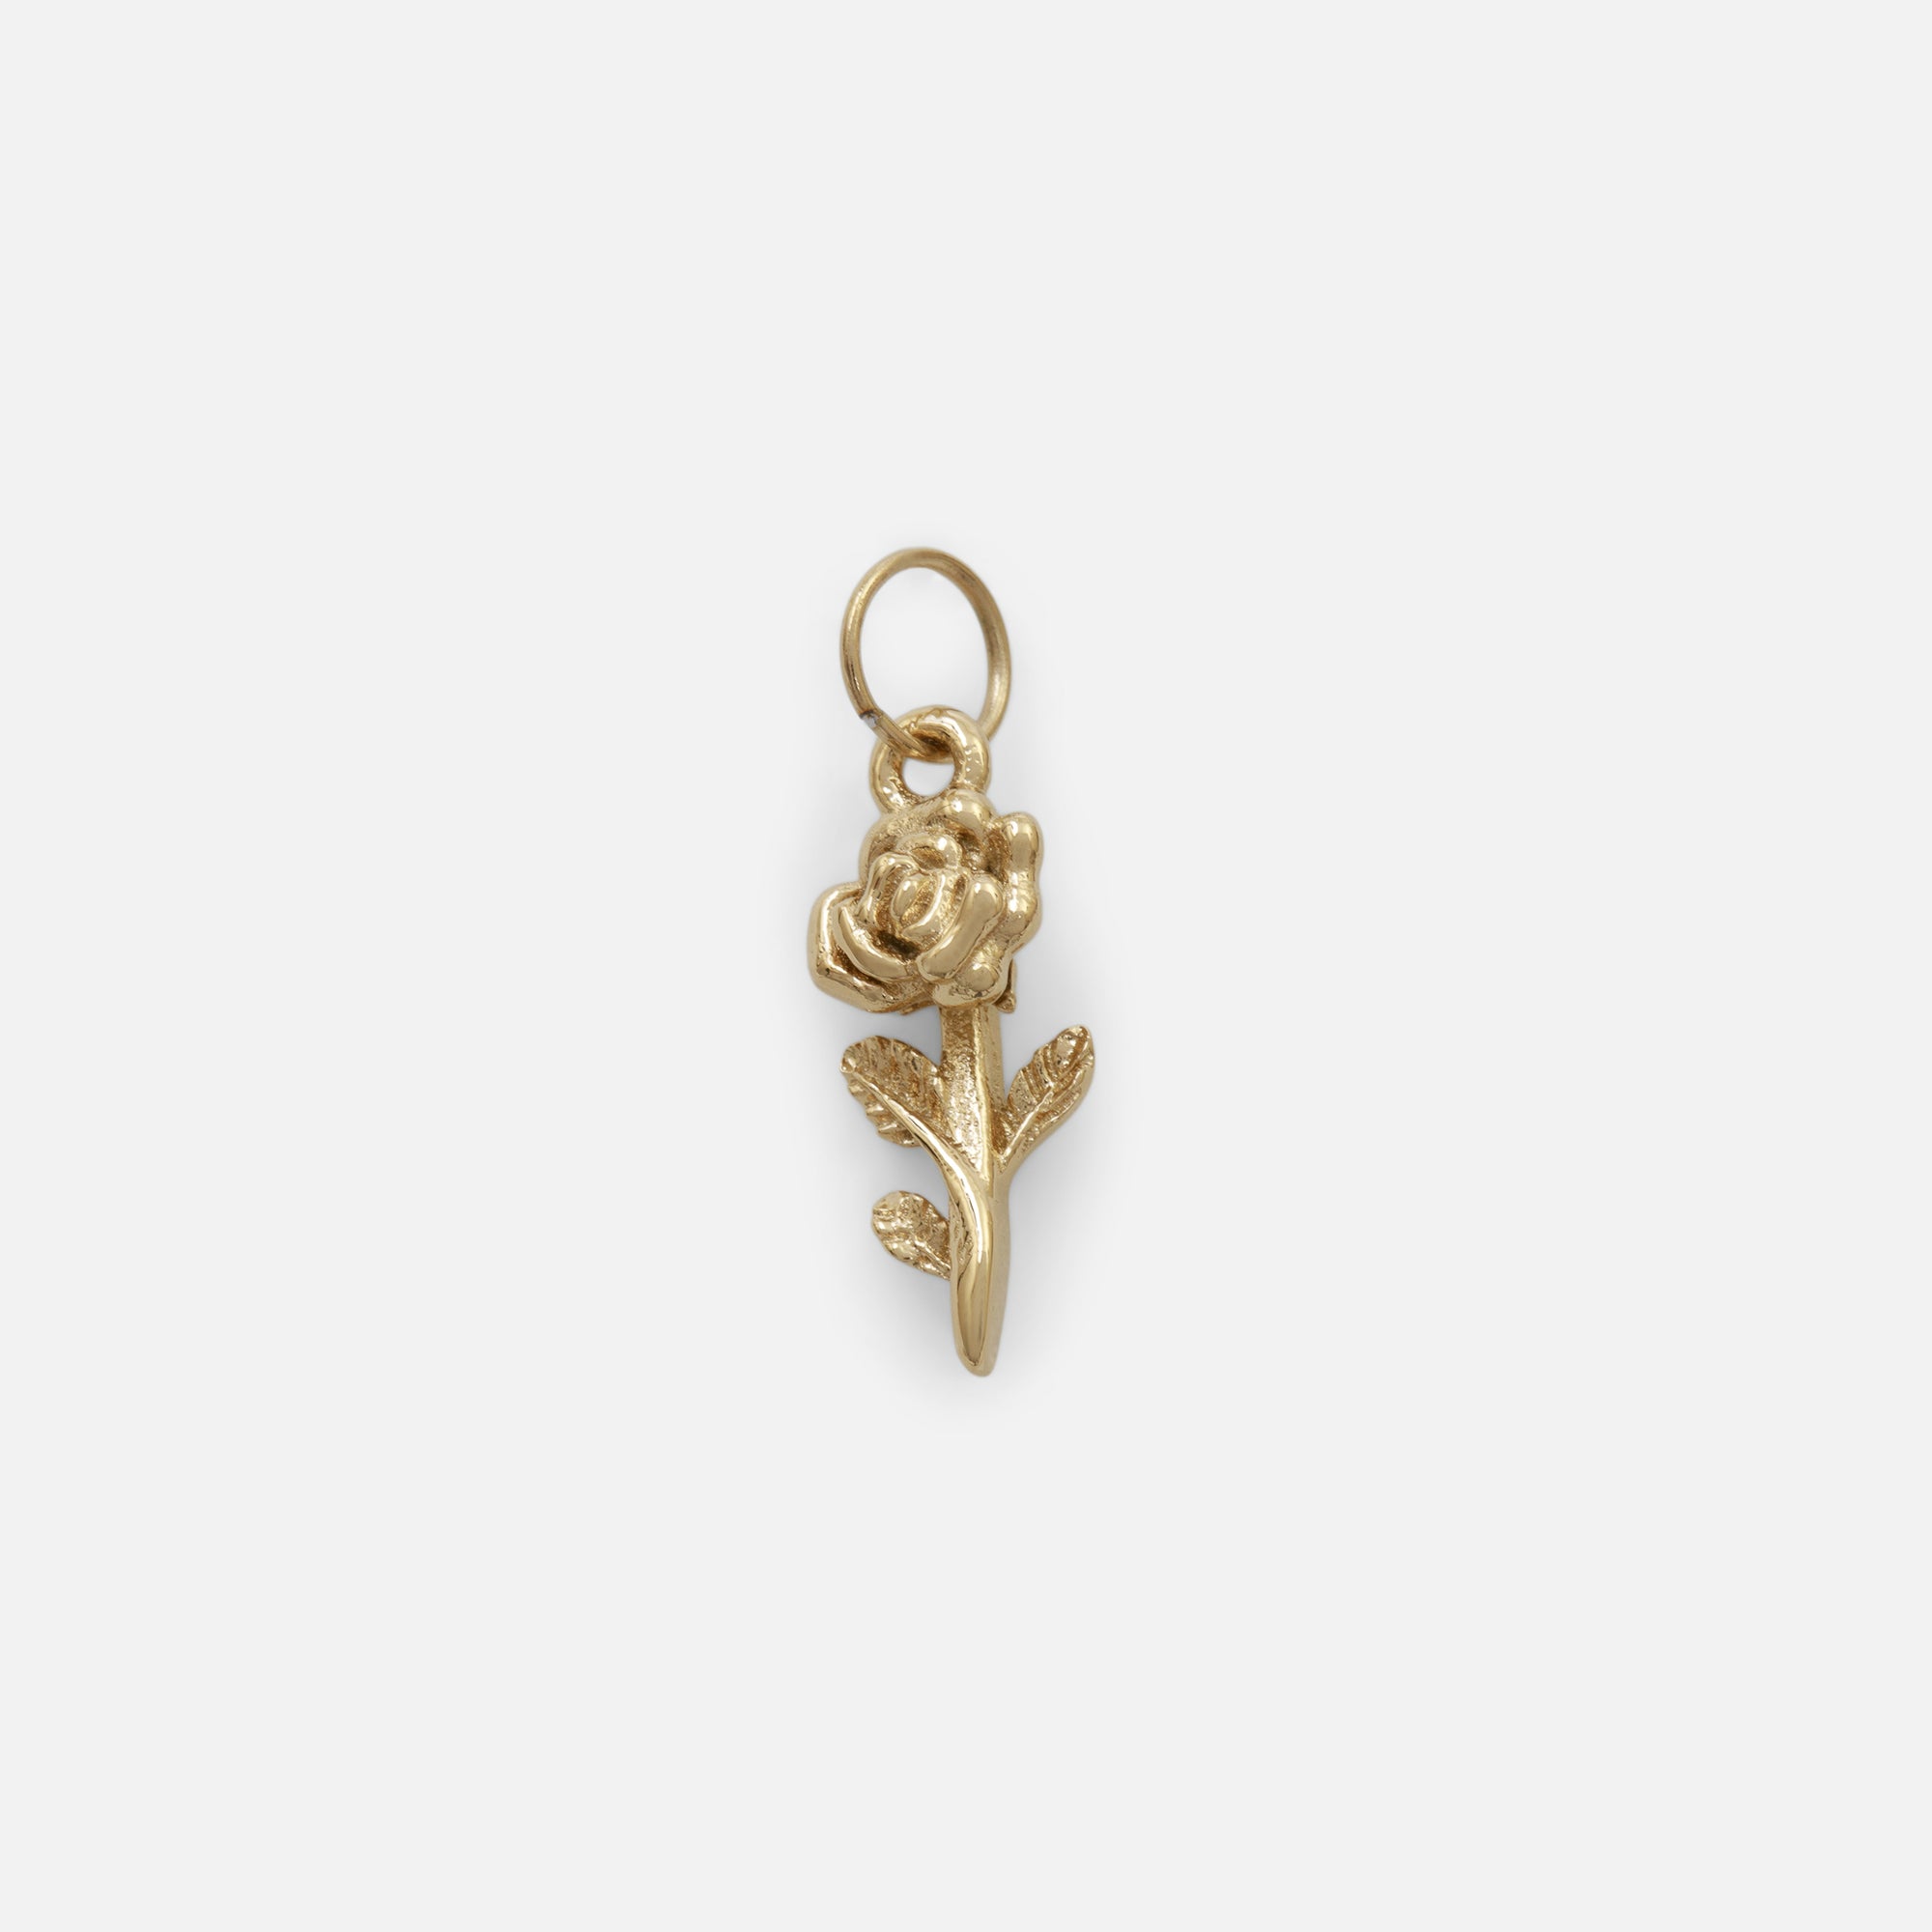 Small golden flower charm